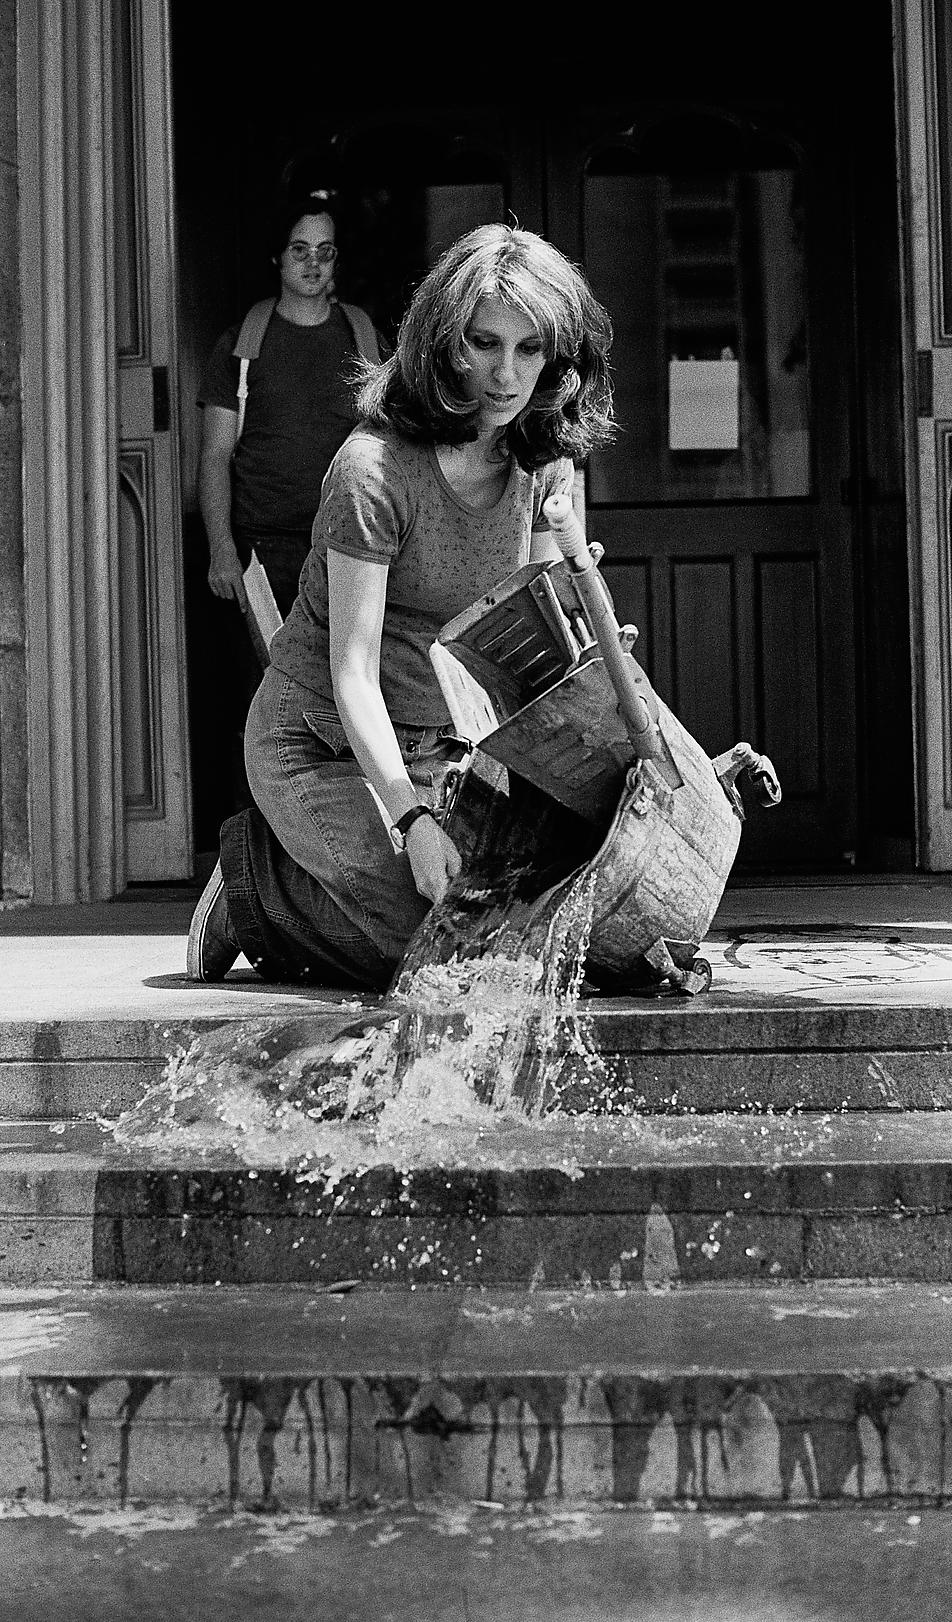 Städning blir konst: Mierle Laderman Ukeles ”Washing/Tracks/Maintenance: Outside” (1973). Foto: Mierle Laderman Ukeles/ Courtesy to Ronald Feldman Fine Arts Gallery, New York